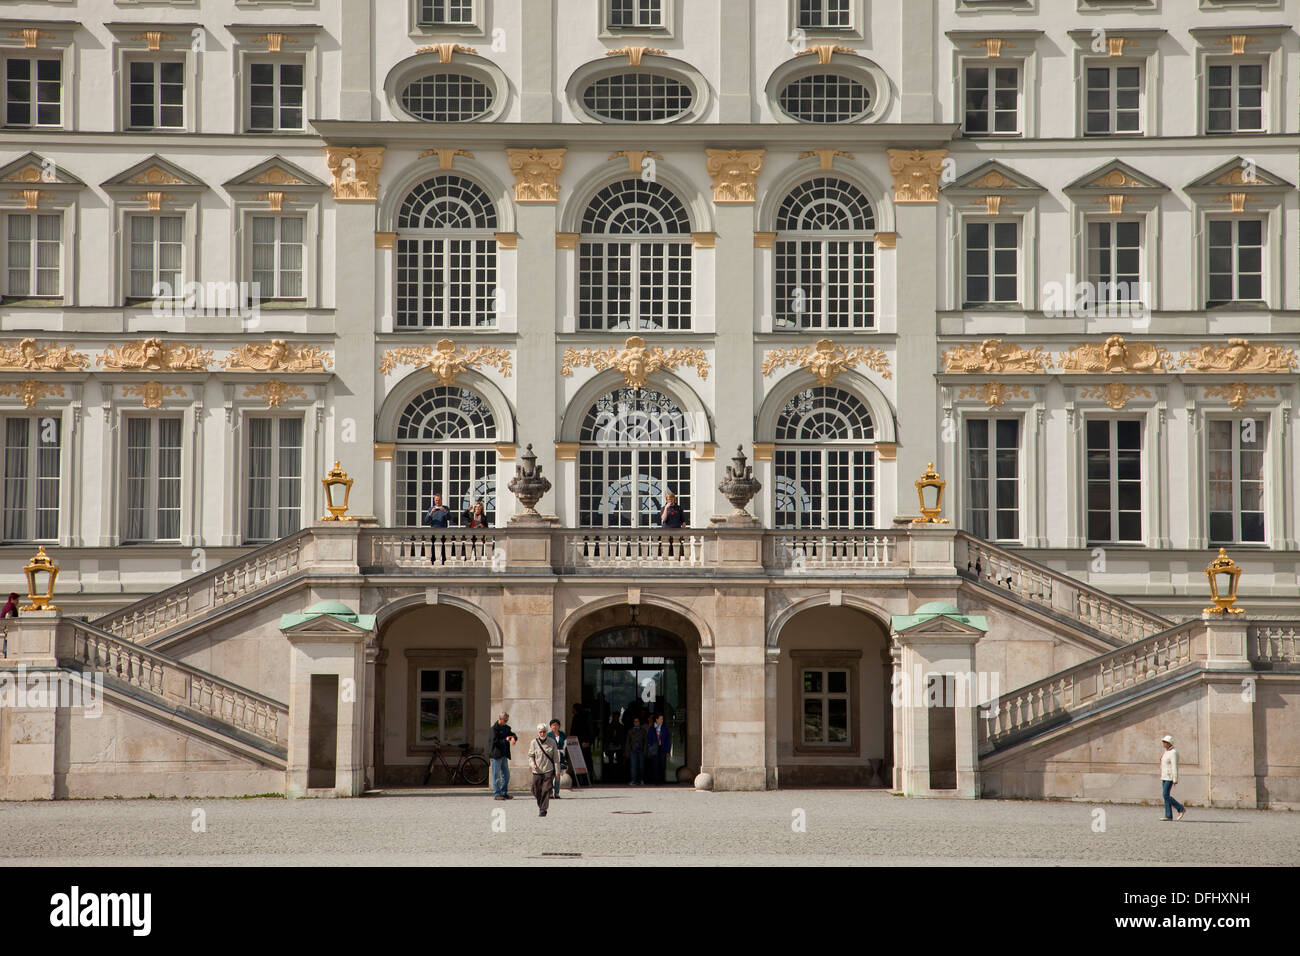 Nymphenburg Palace in Munich, Bavaria, Germany Stock Photo